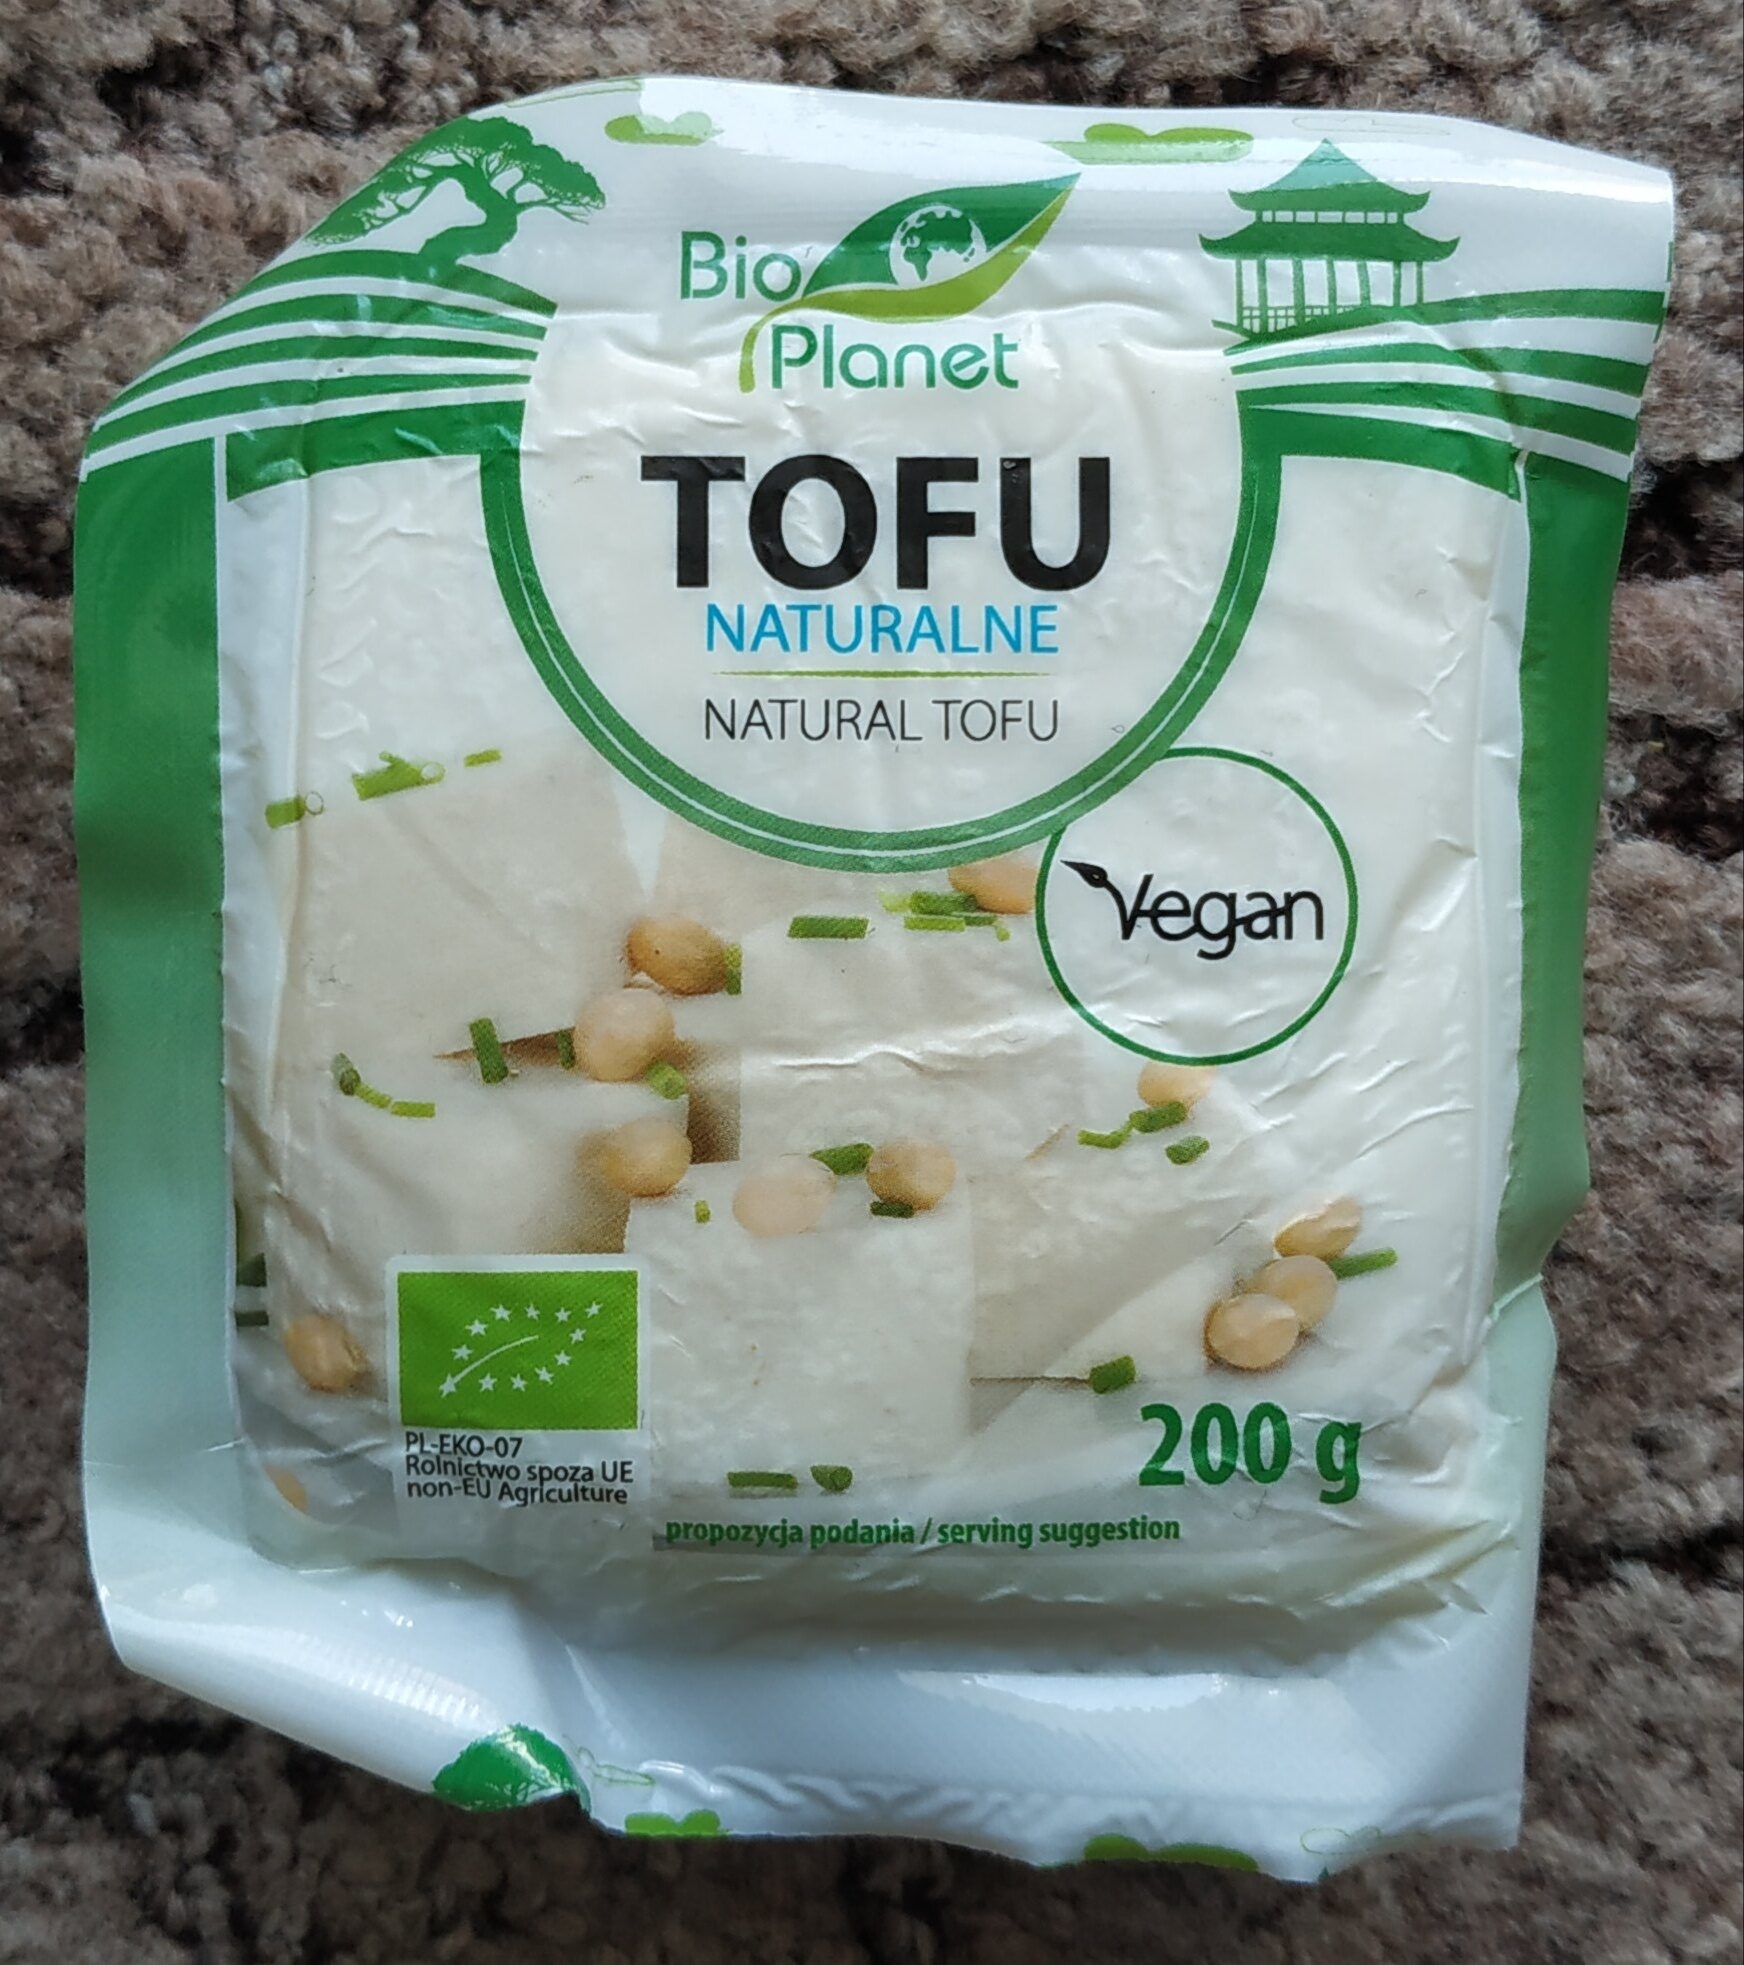 Tofu naturalne - Produkt